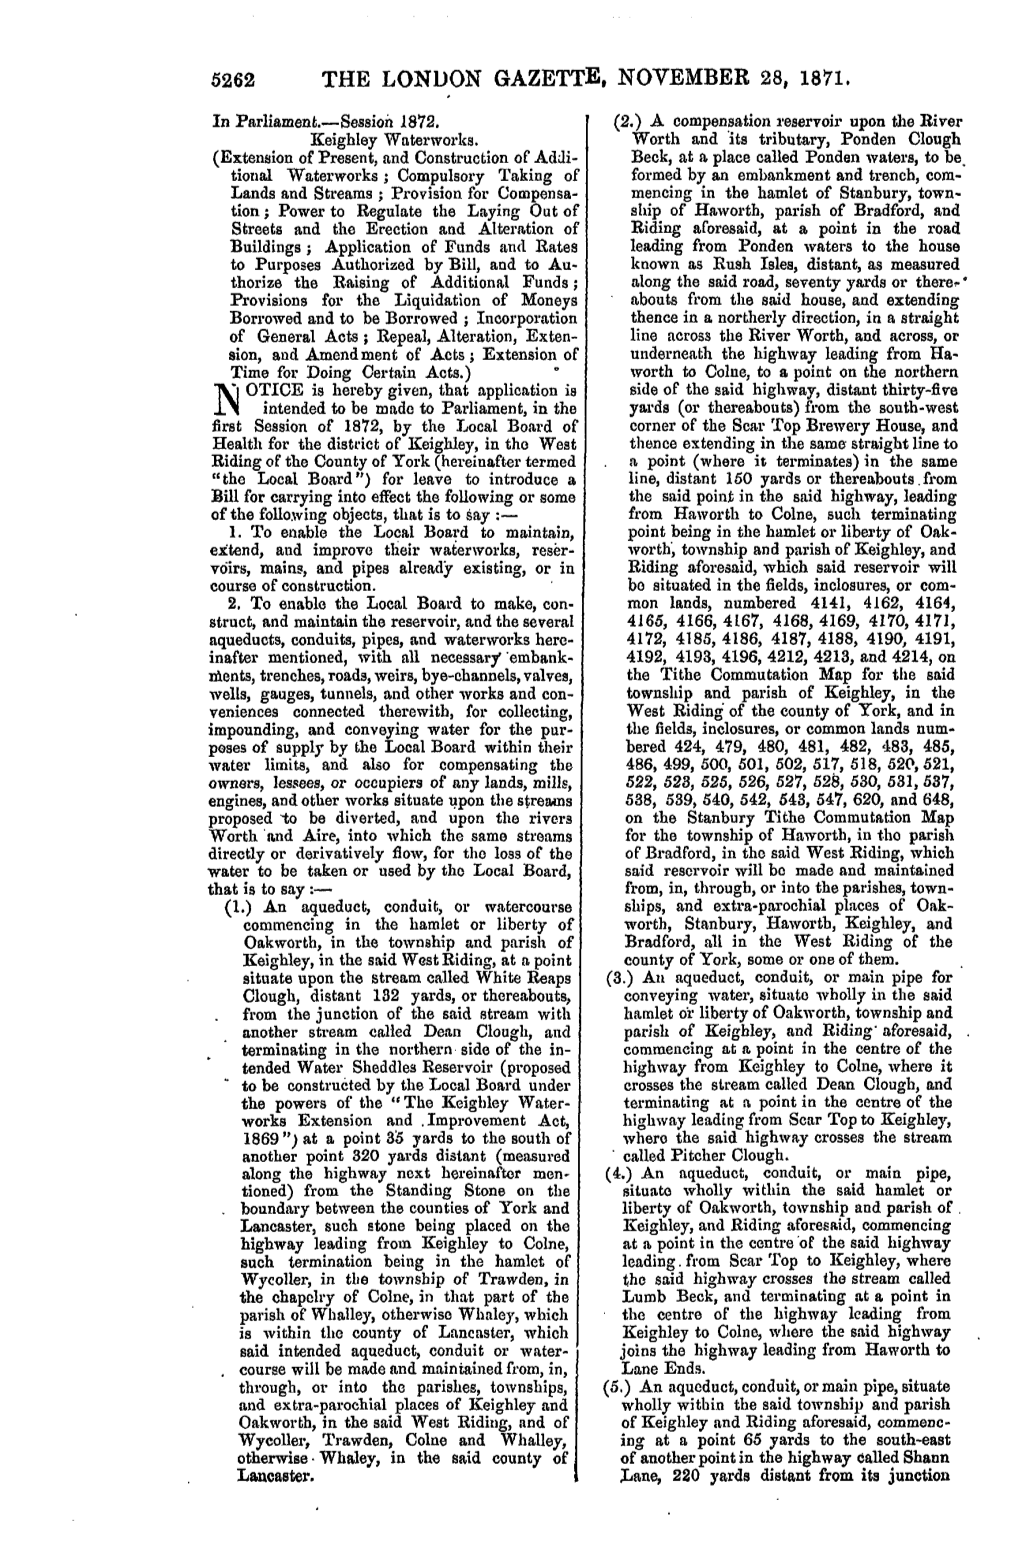 The London Gazette, November 28, 1871